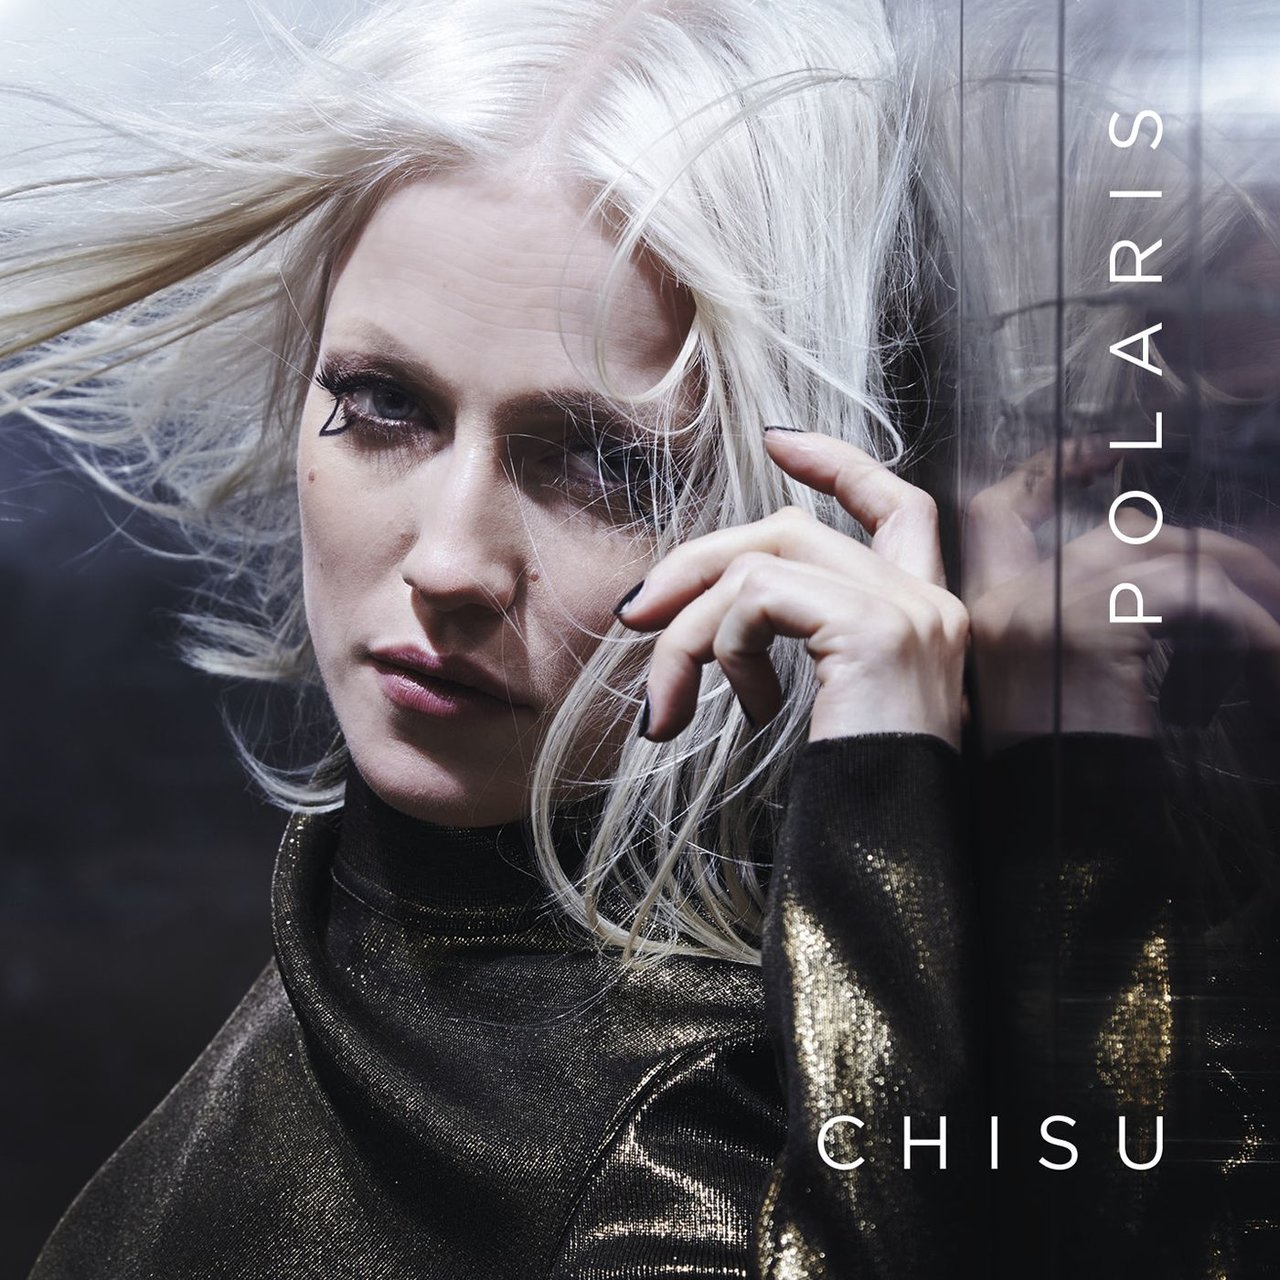 Chisu — Tuu mua vastaan cover artwork